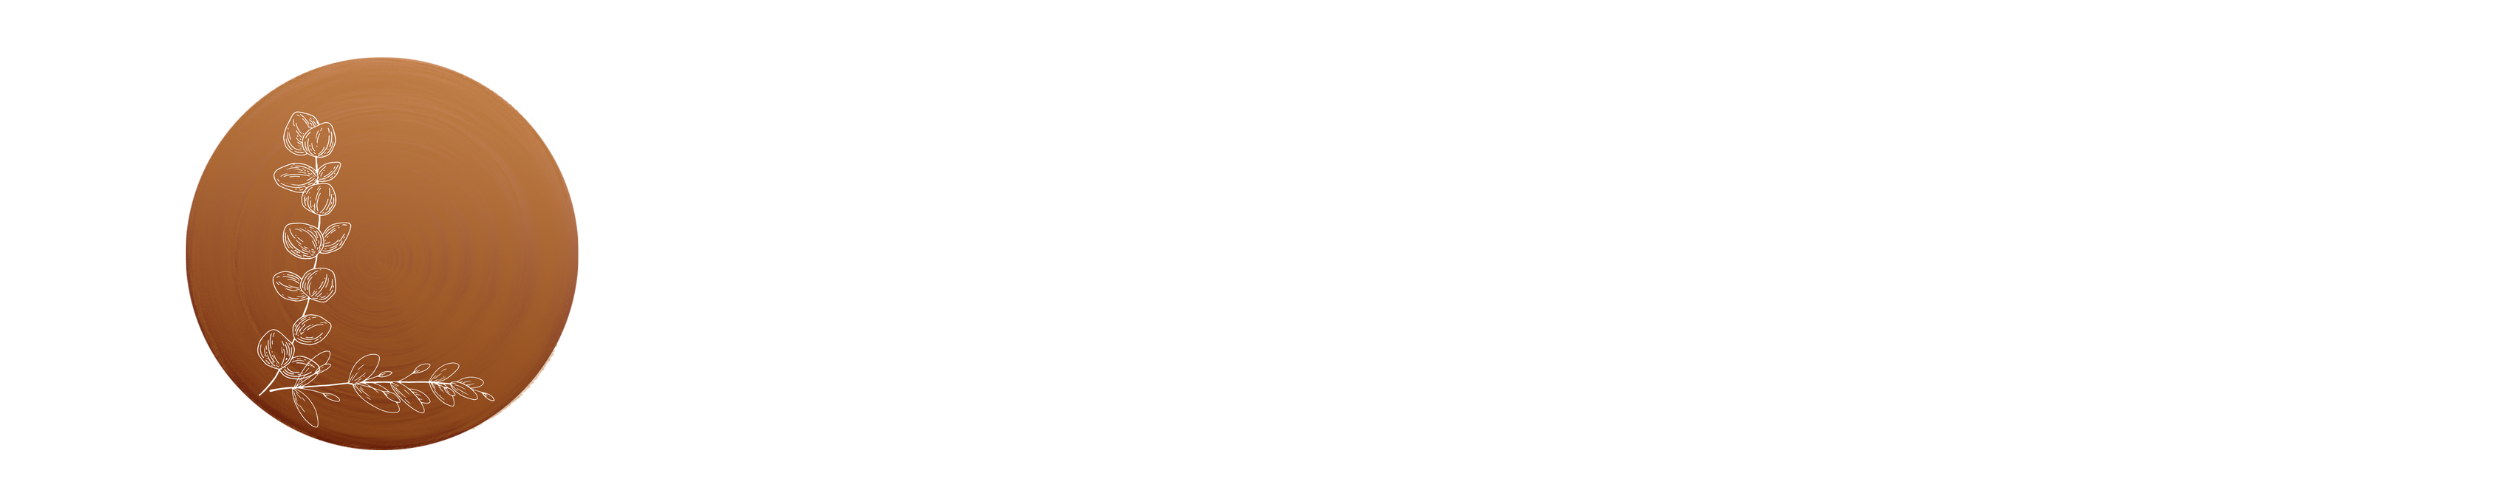 LansleyLee